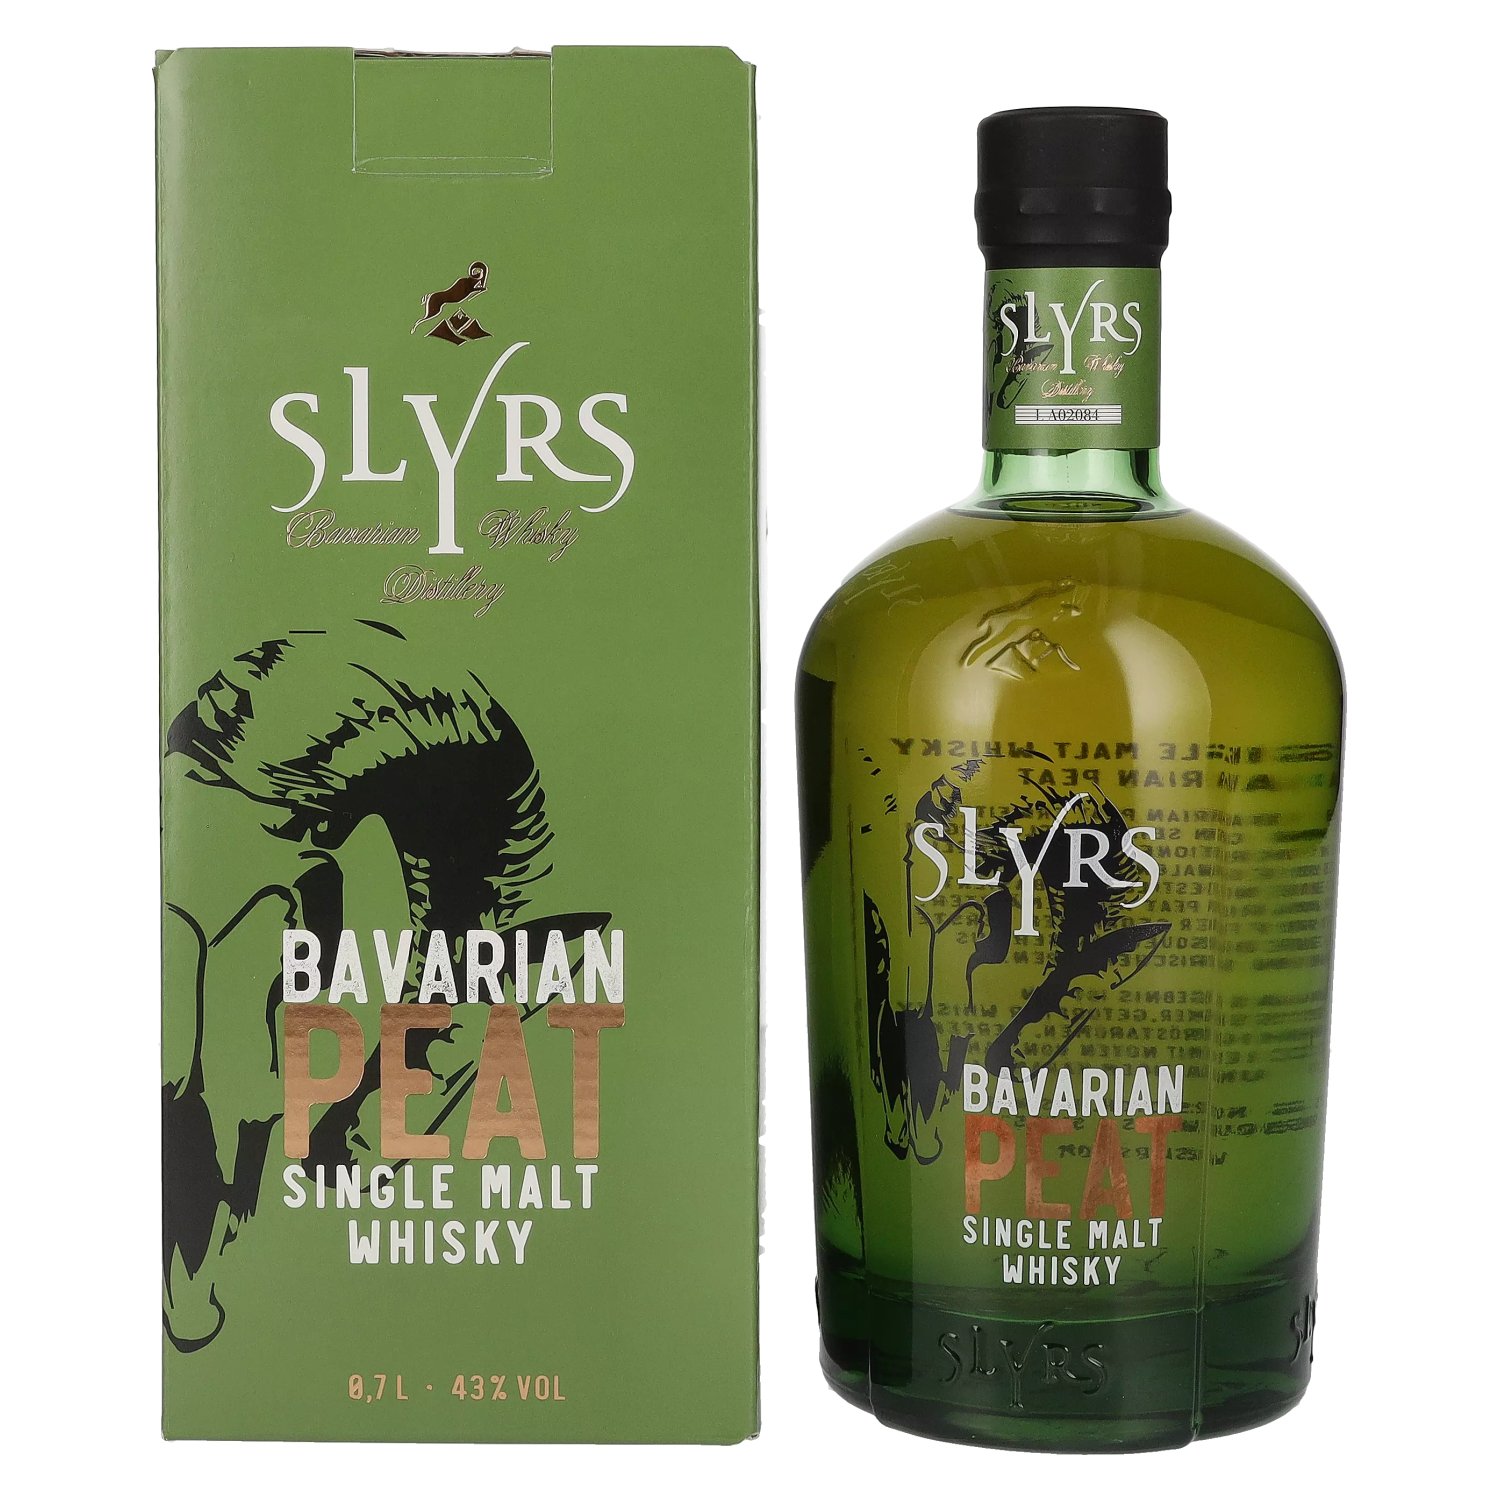 Slyrs Bavarian Peat Single Malt Whisky 43% Vol. 0,7l in Giftbox | Whisky